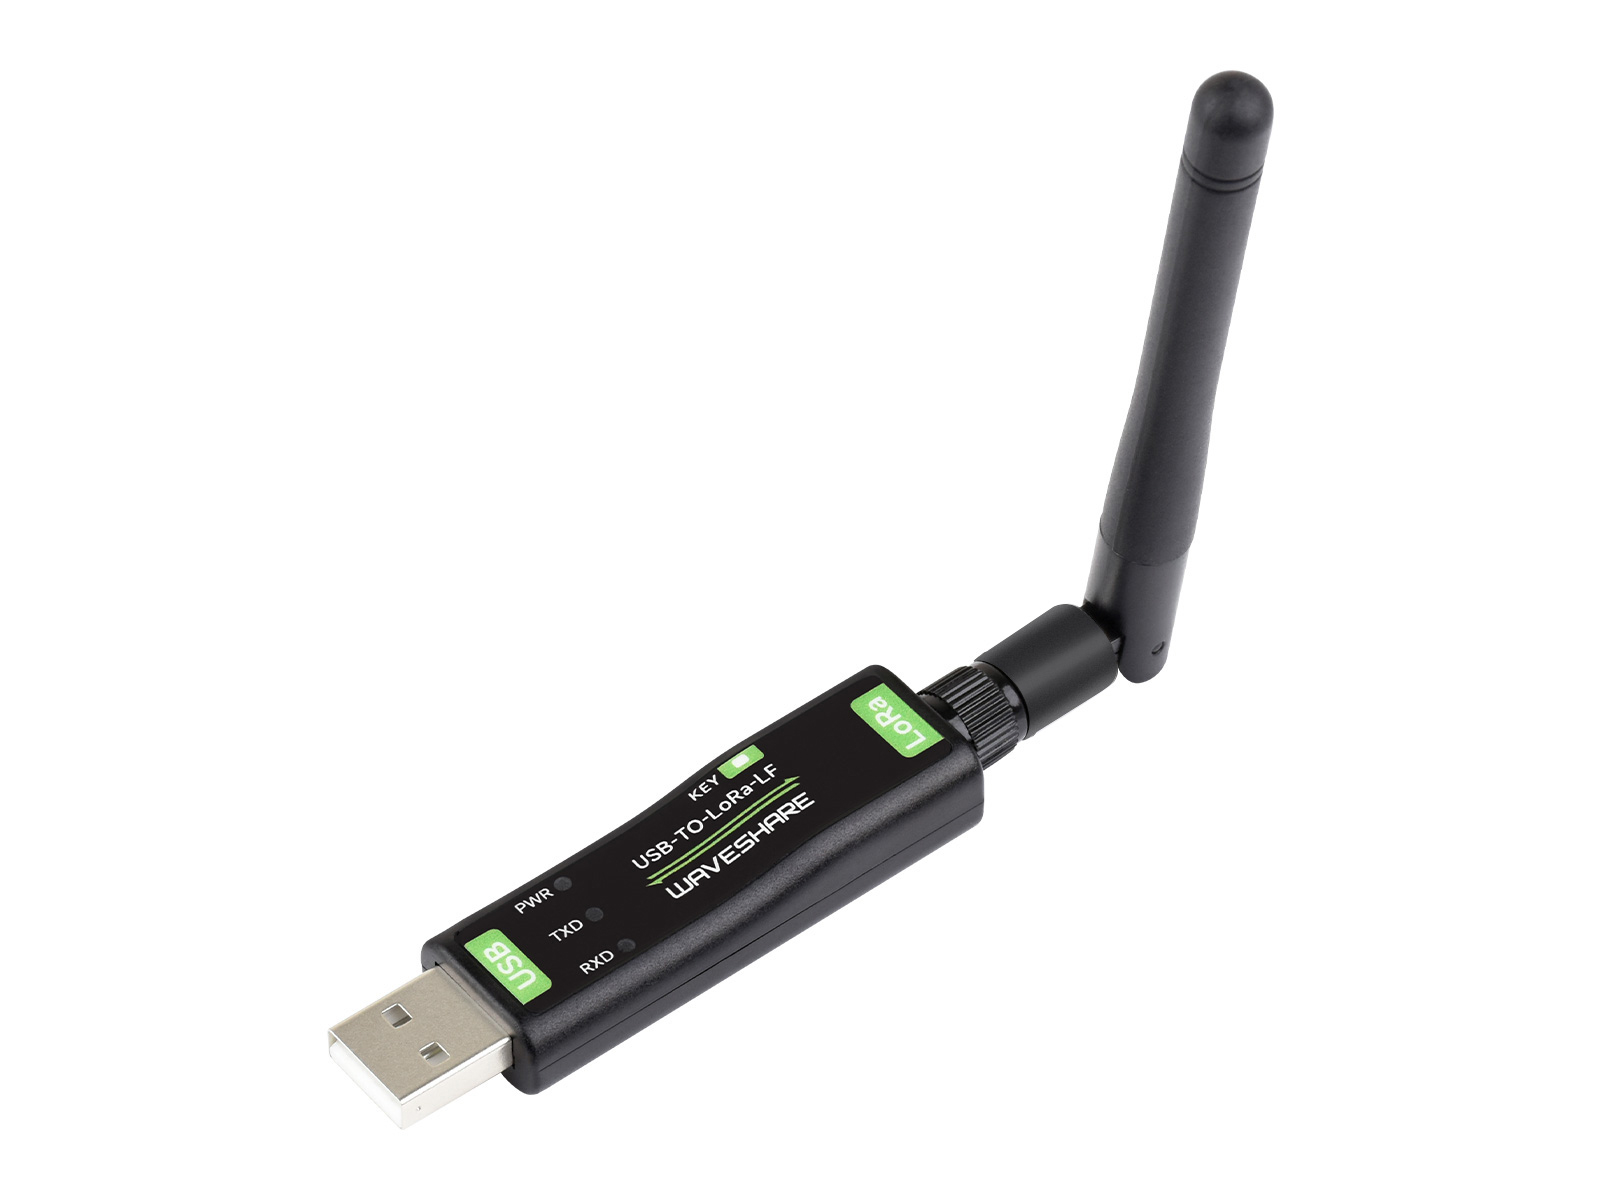 USB转LoRa数传模块 基于SX1262方案 无线数传终端 工业农业数据采集 适用于LF频段 采用TCXO晶振